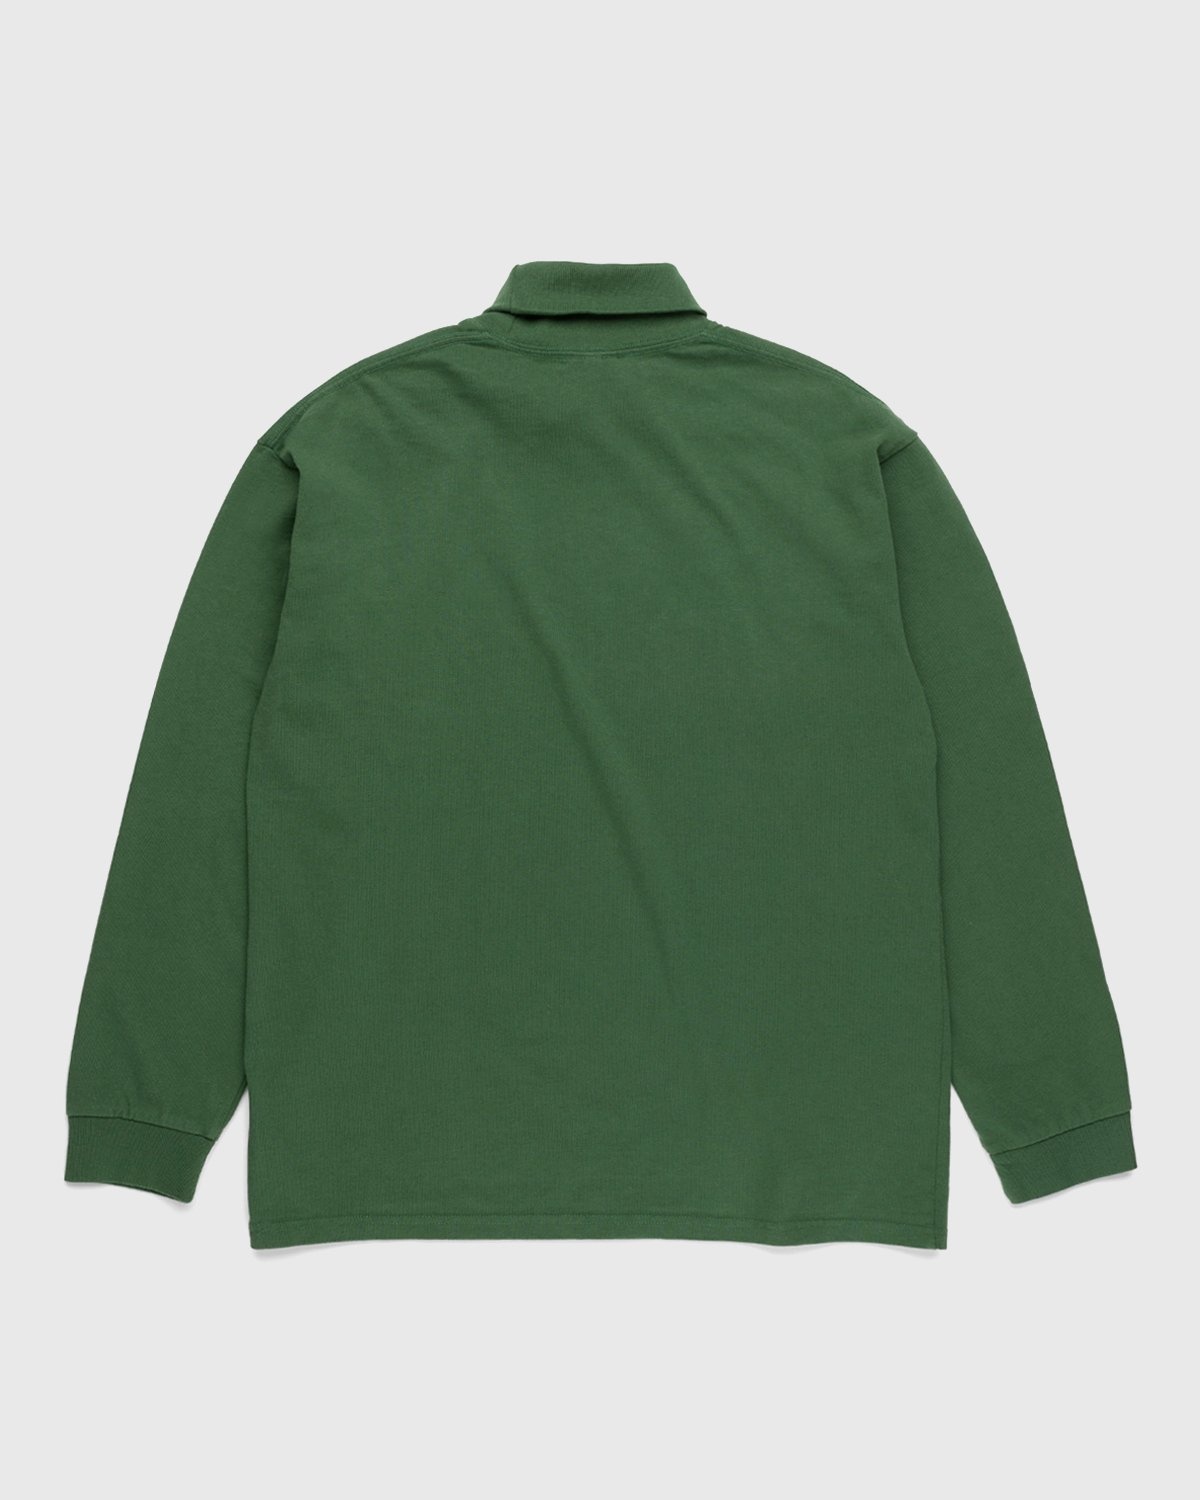 Highsnobiety – Heavy Staples Turtleneck Green - Sweatshirts - Green - Image 2